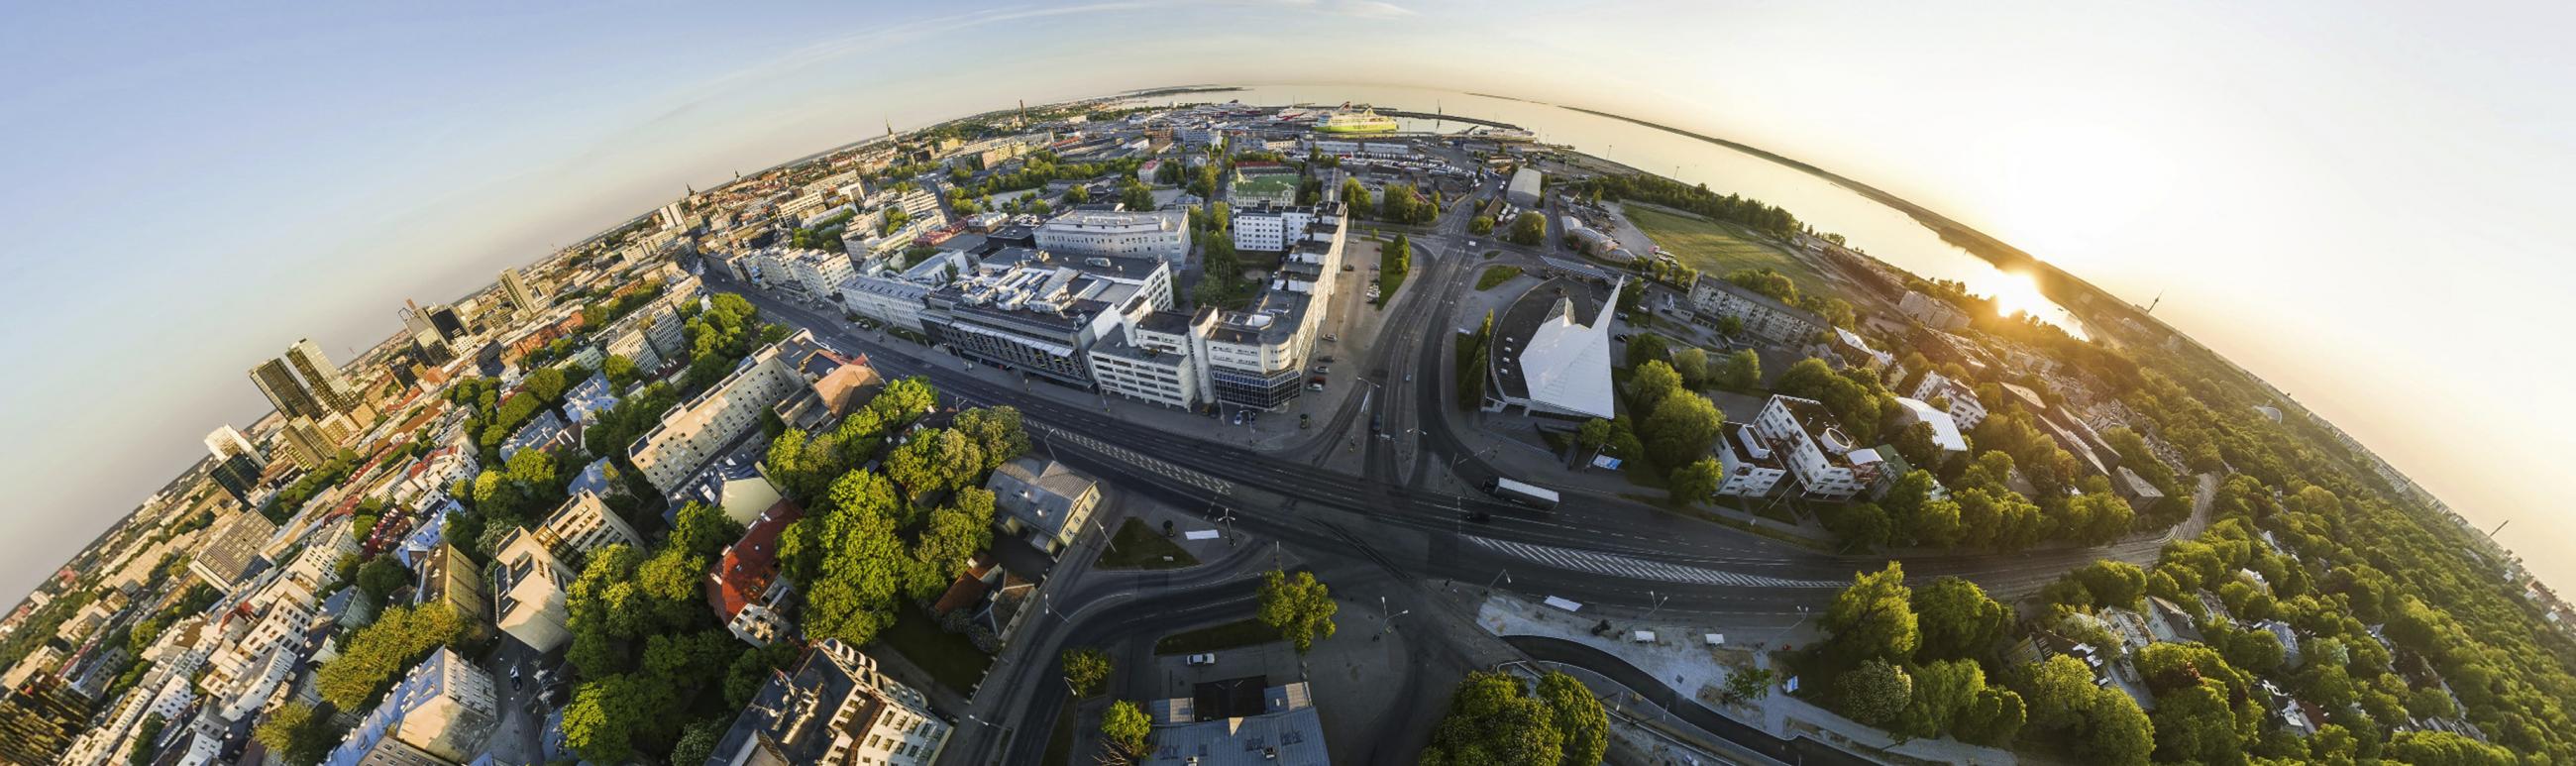 Tallinn University campus birds eye view